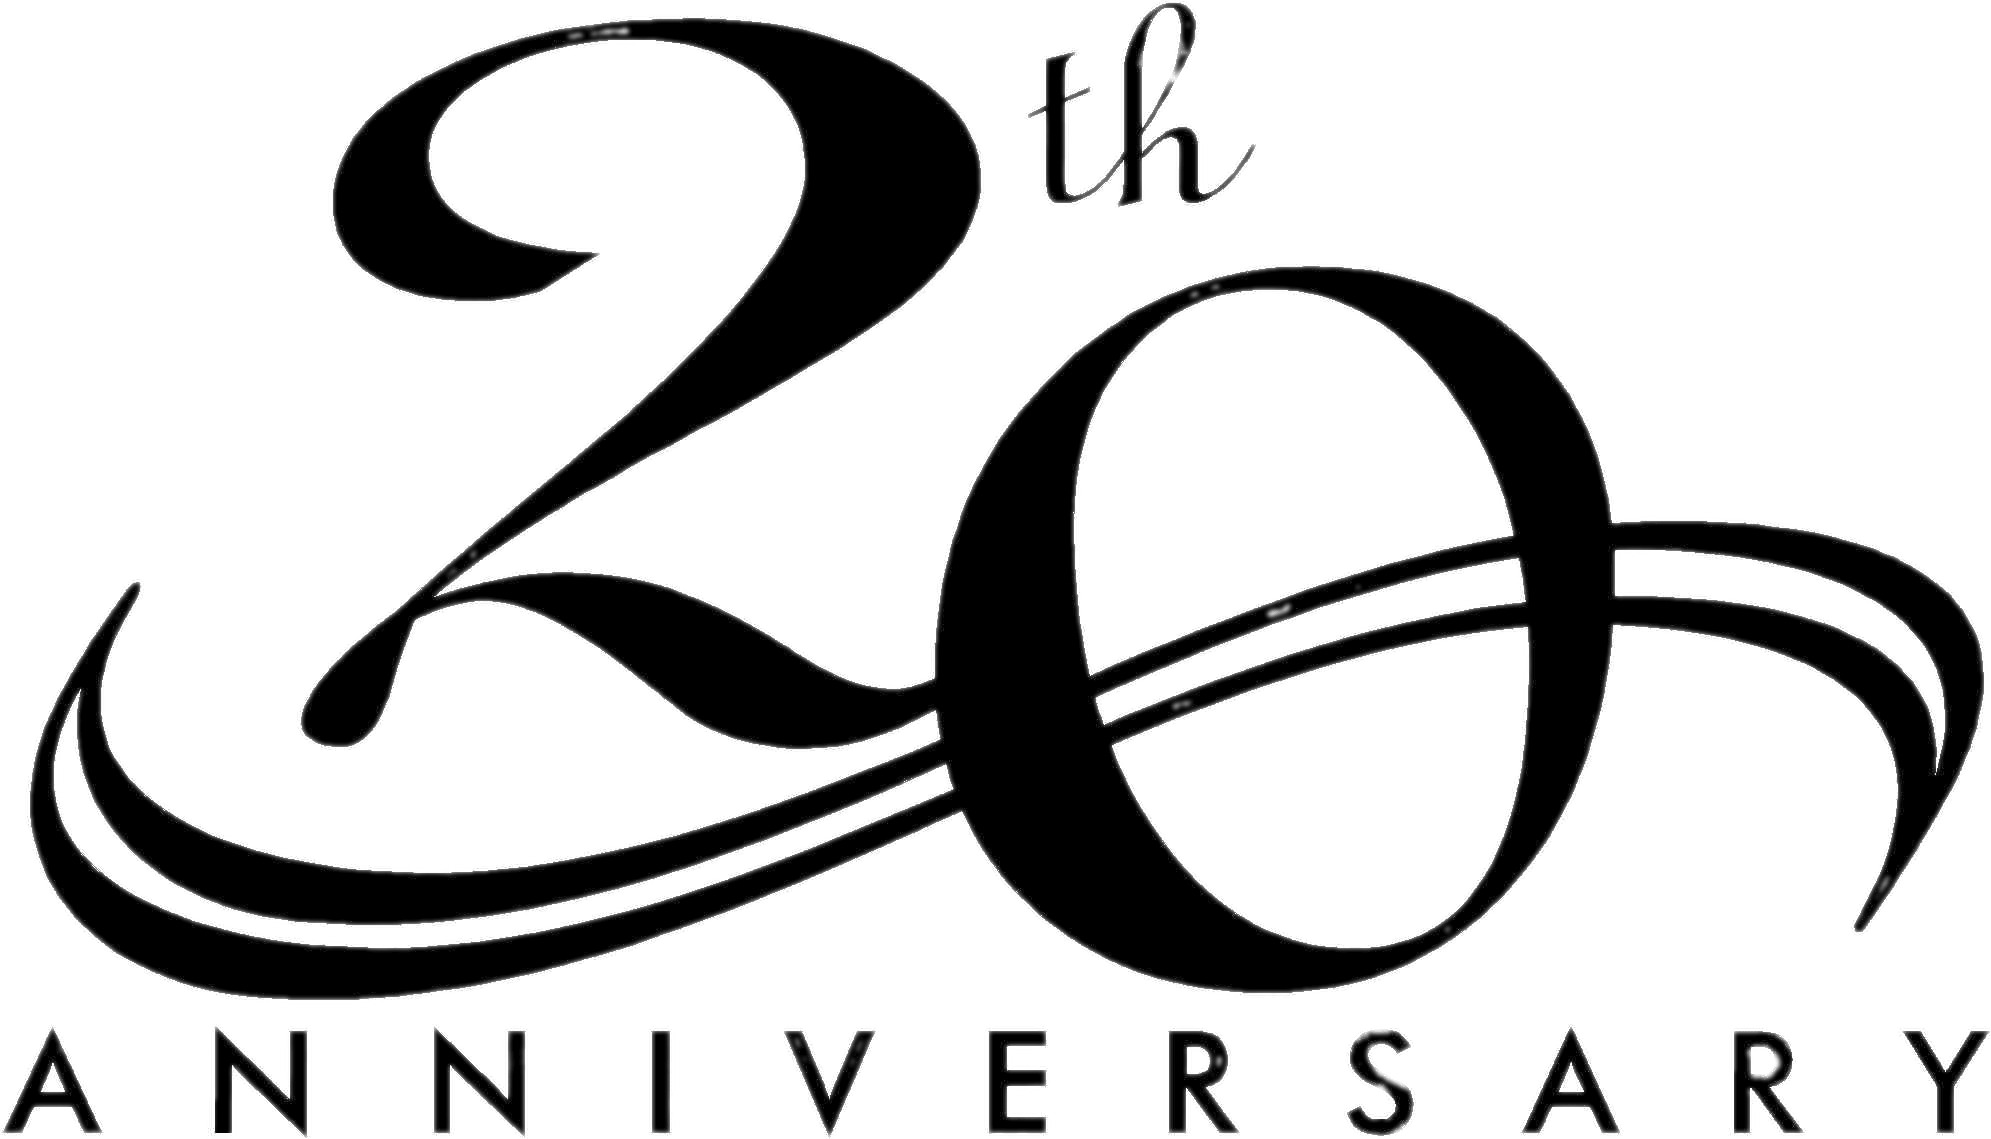 20th Anniversary Elegant icons